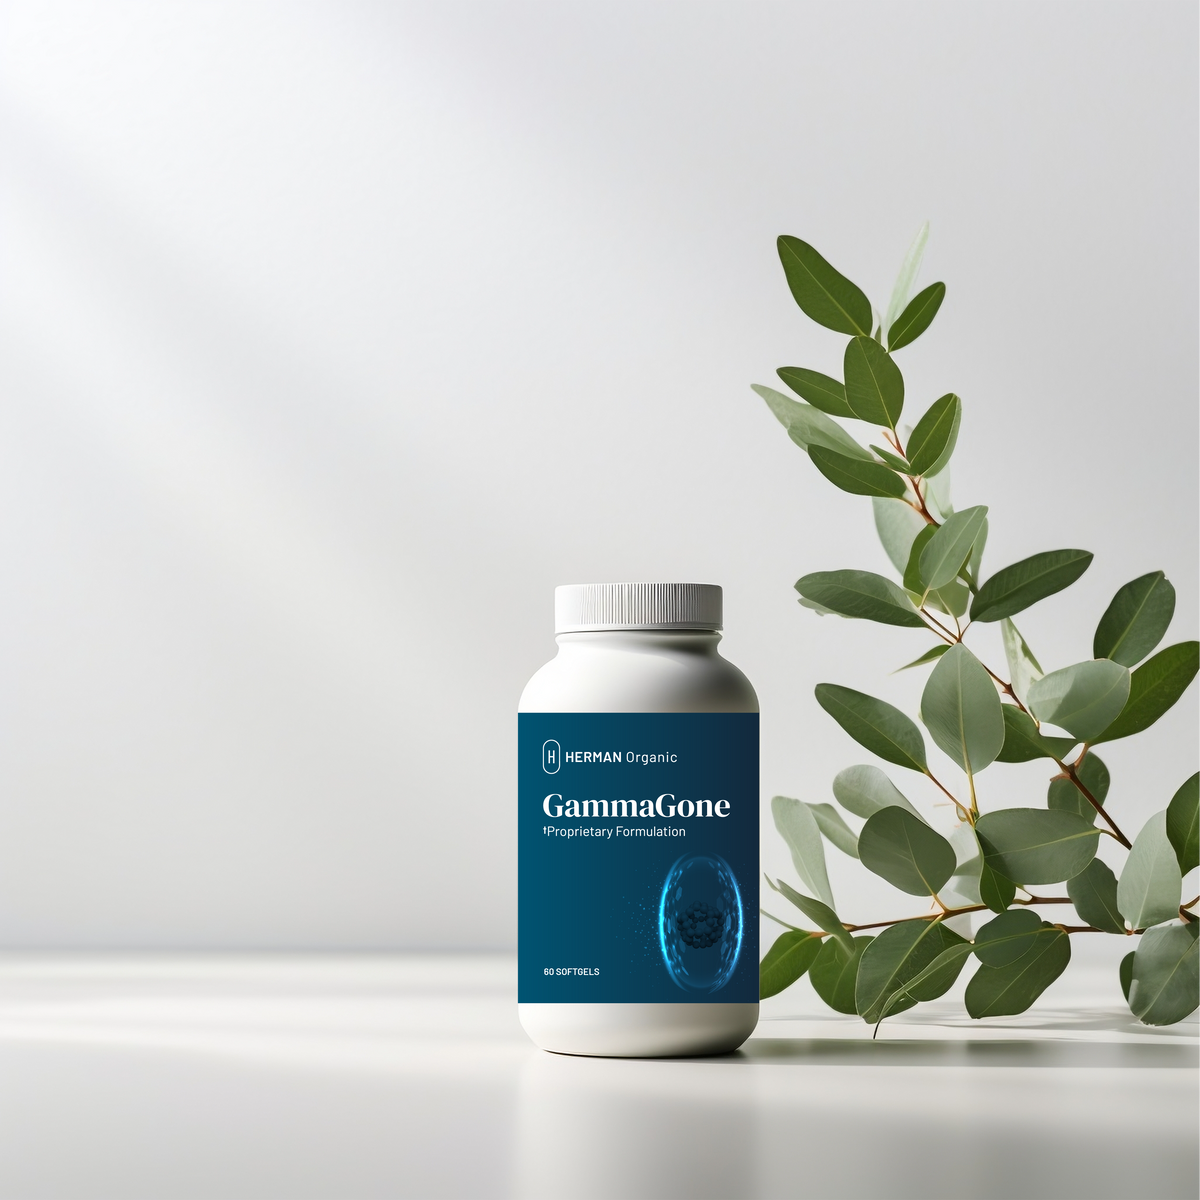 Herman Organic Vitamins &amp; Supplements GammaGone